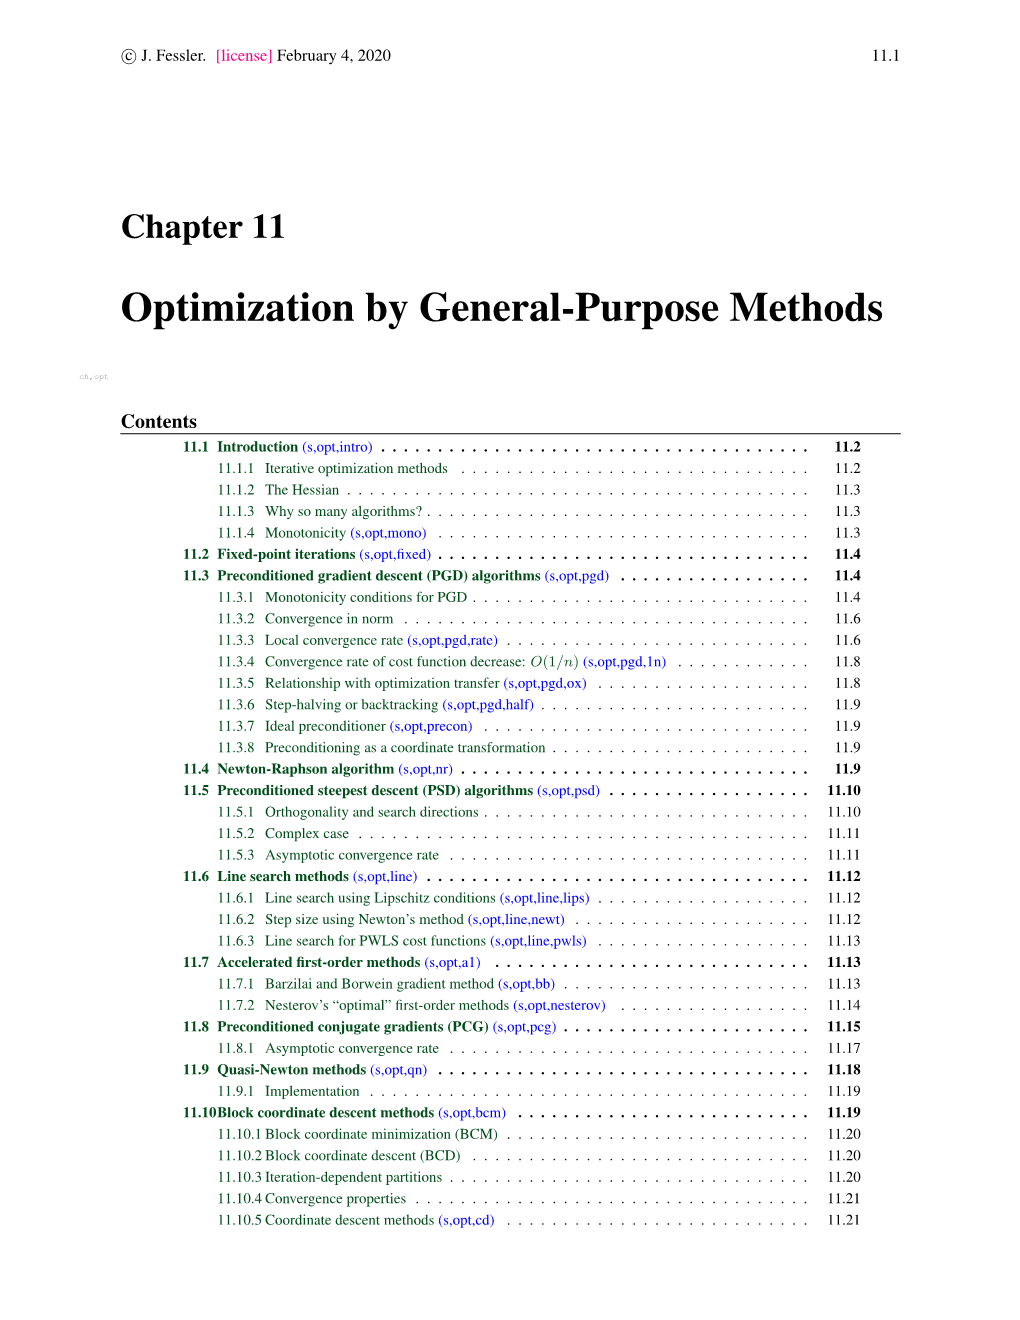 Optimization by General-Purpose Methods